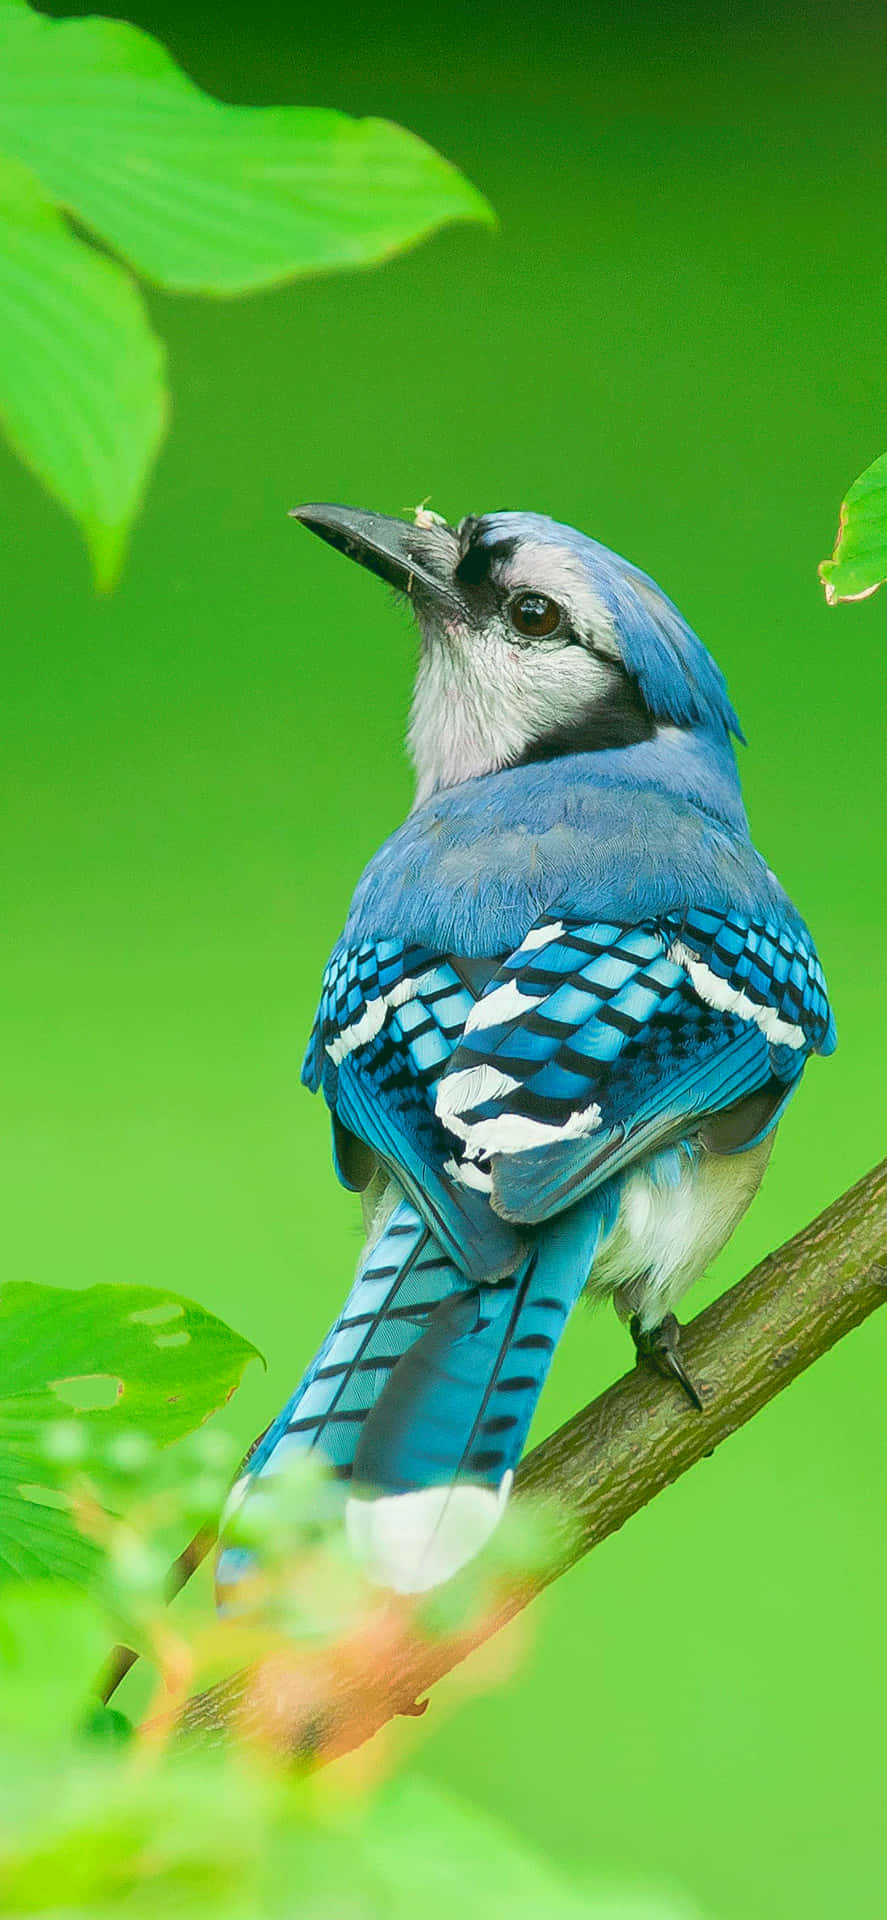 Hermosaimagen De Un Pájaro Azul Jay Para Iphone Inspirada En La Naturaleza. Fondo de pantalla